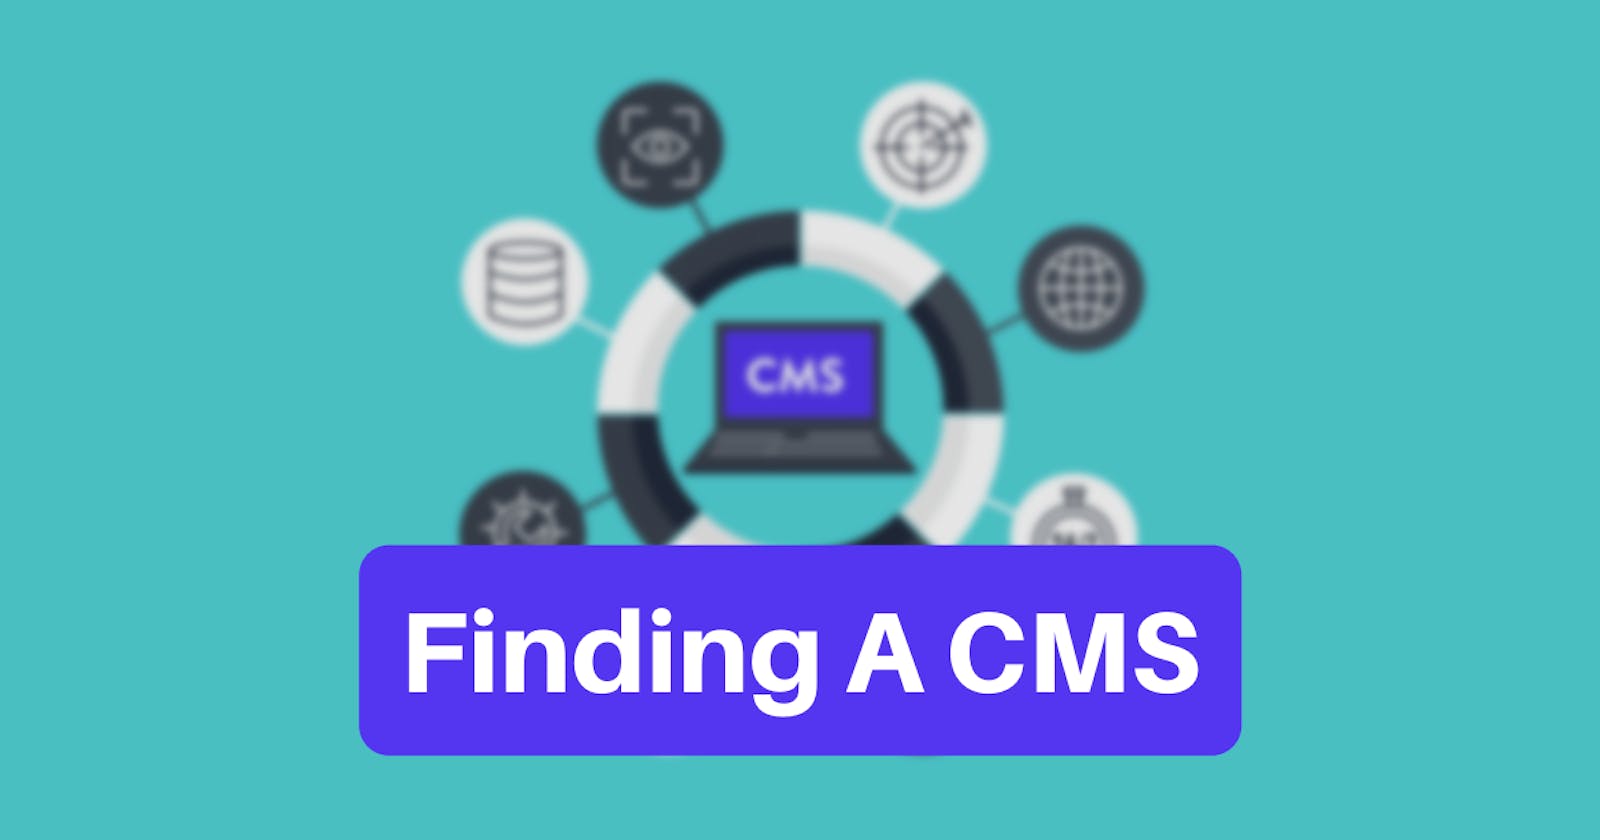 Finding A CMS: Update